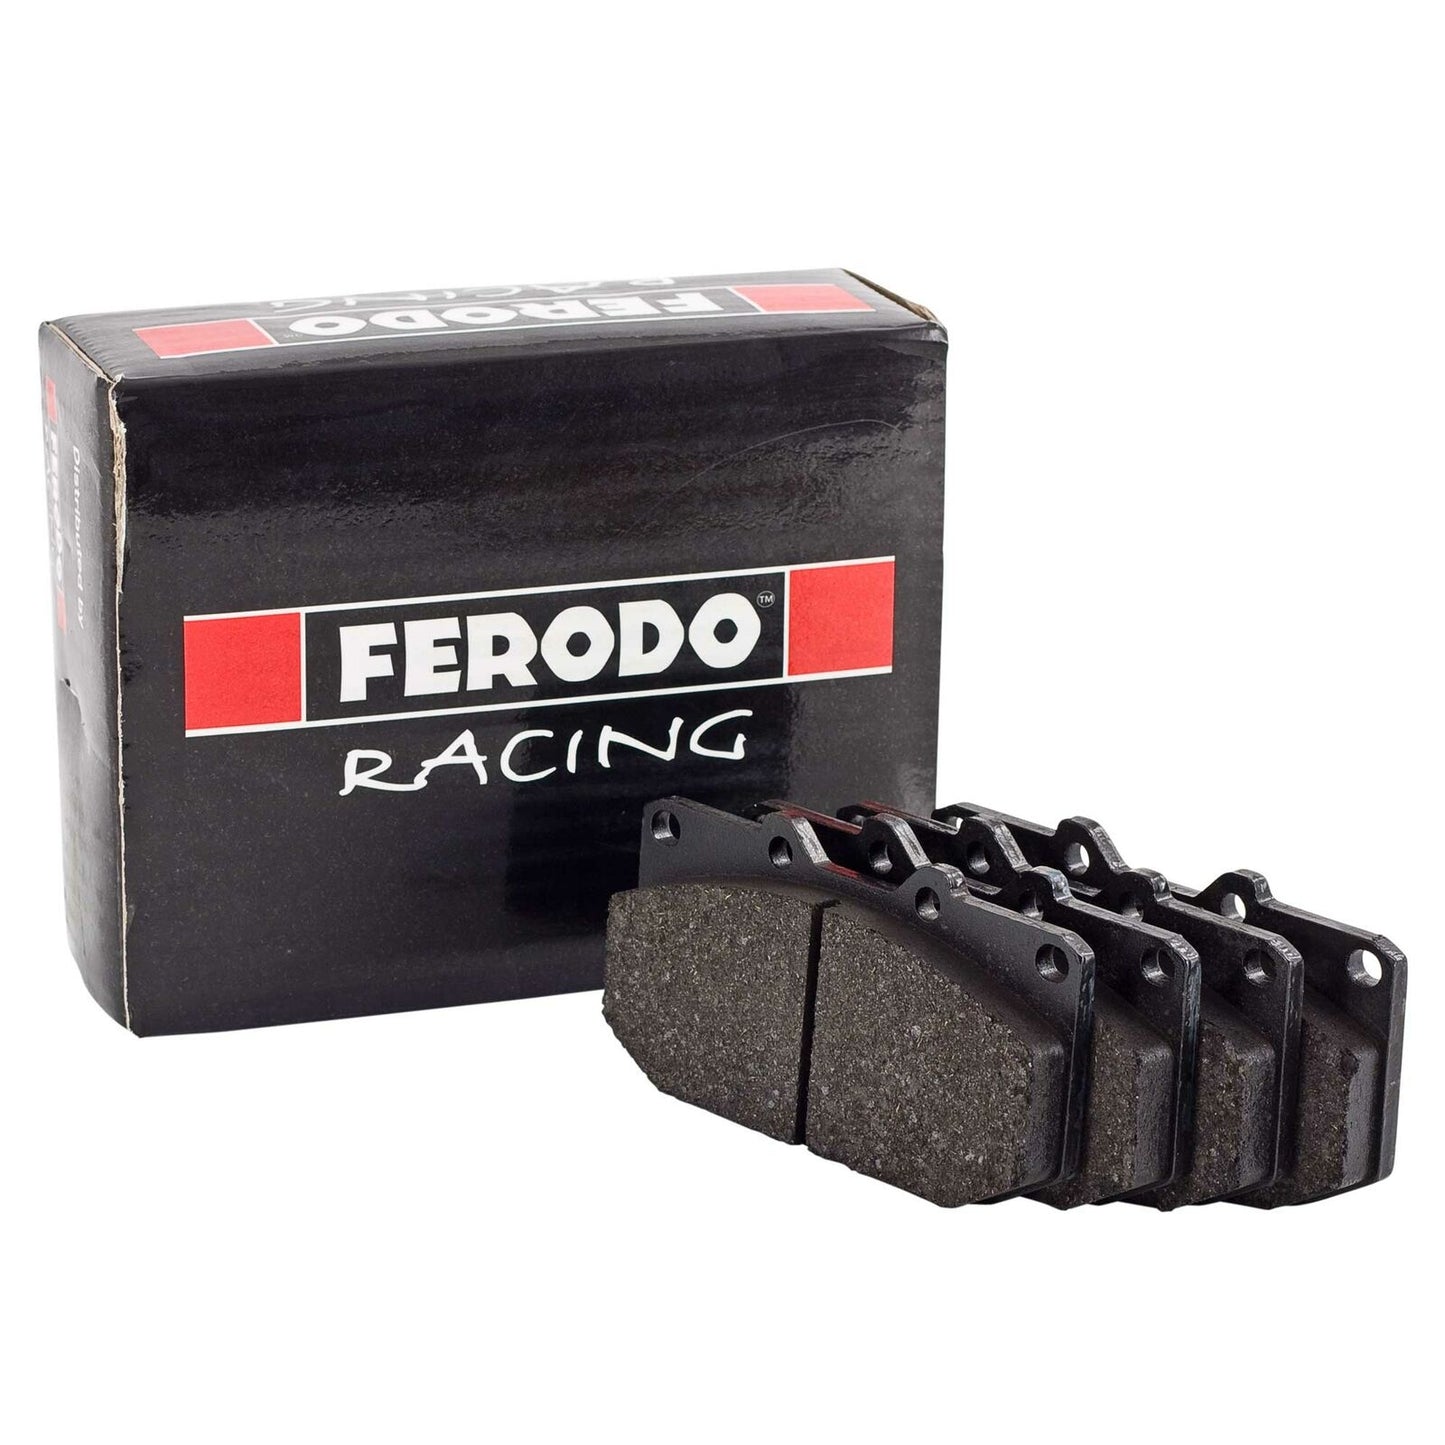 Ferodo DS2500 Brake Pads Rear E9x X1 Performance Brakes